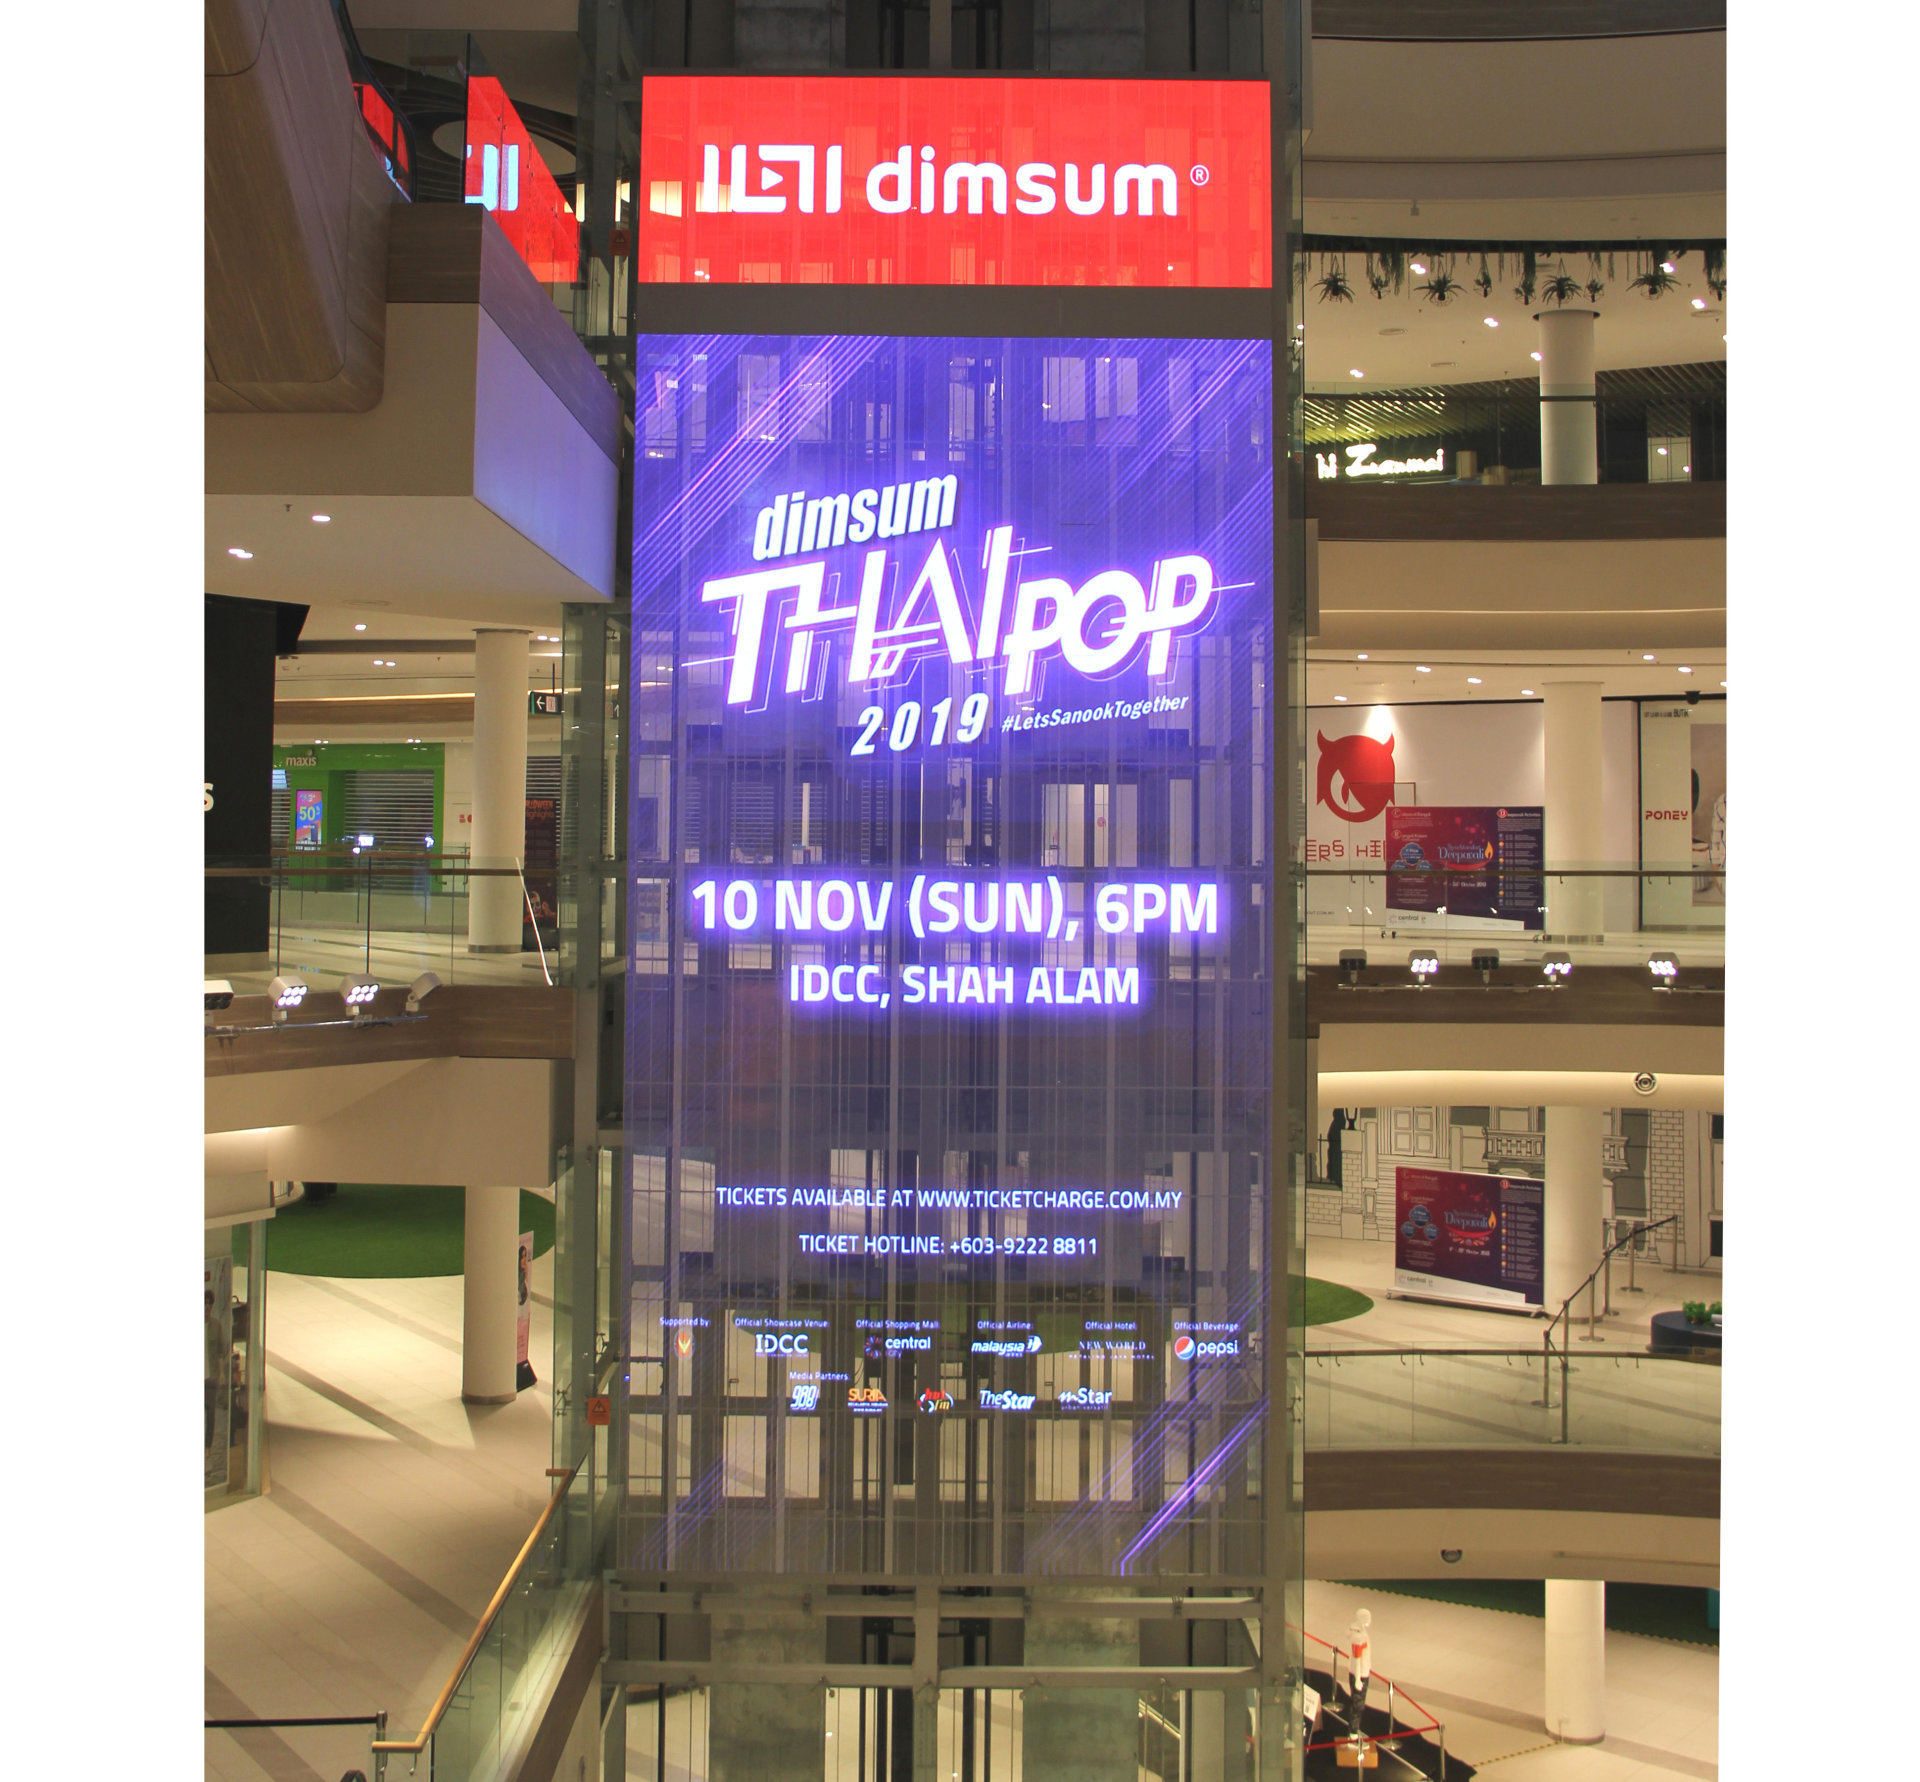 Atrium transparent screen of a famous mall